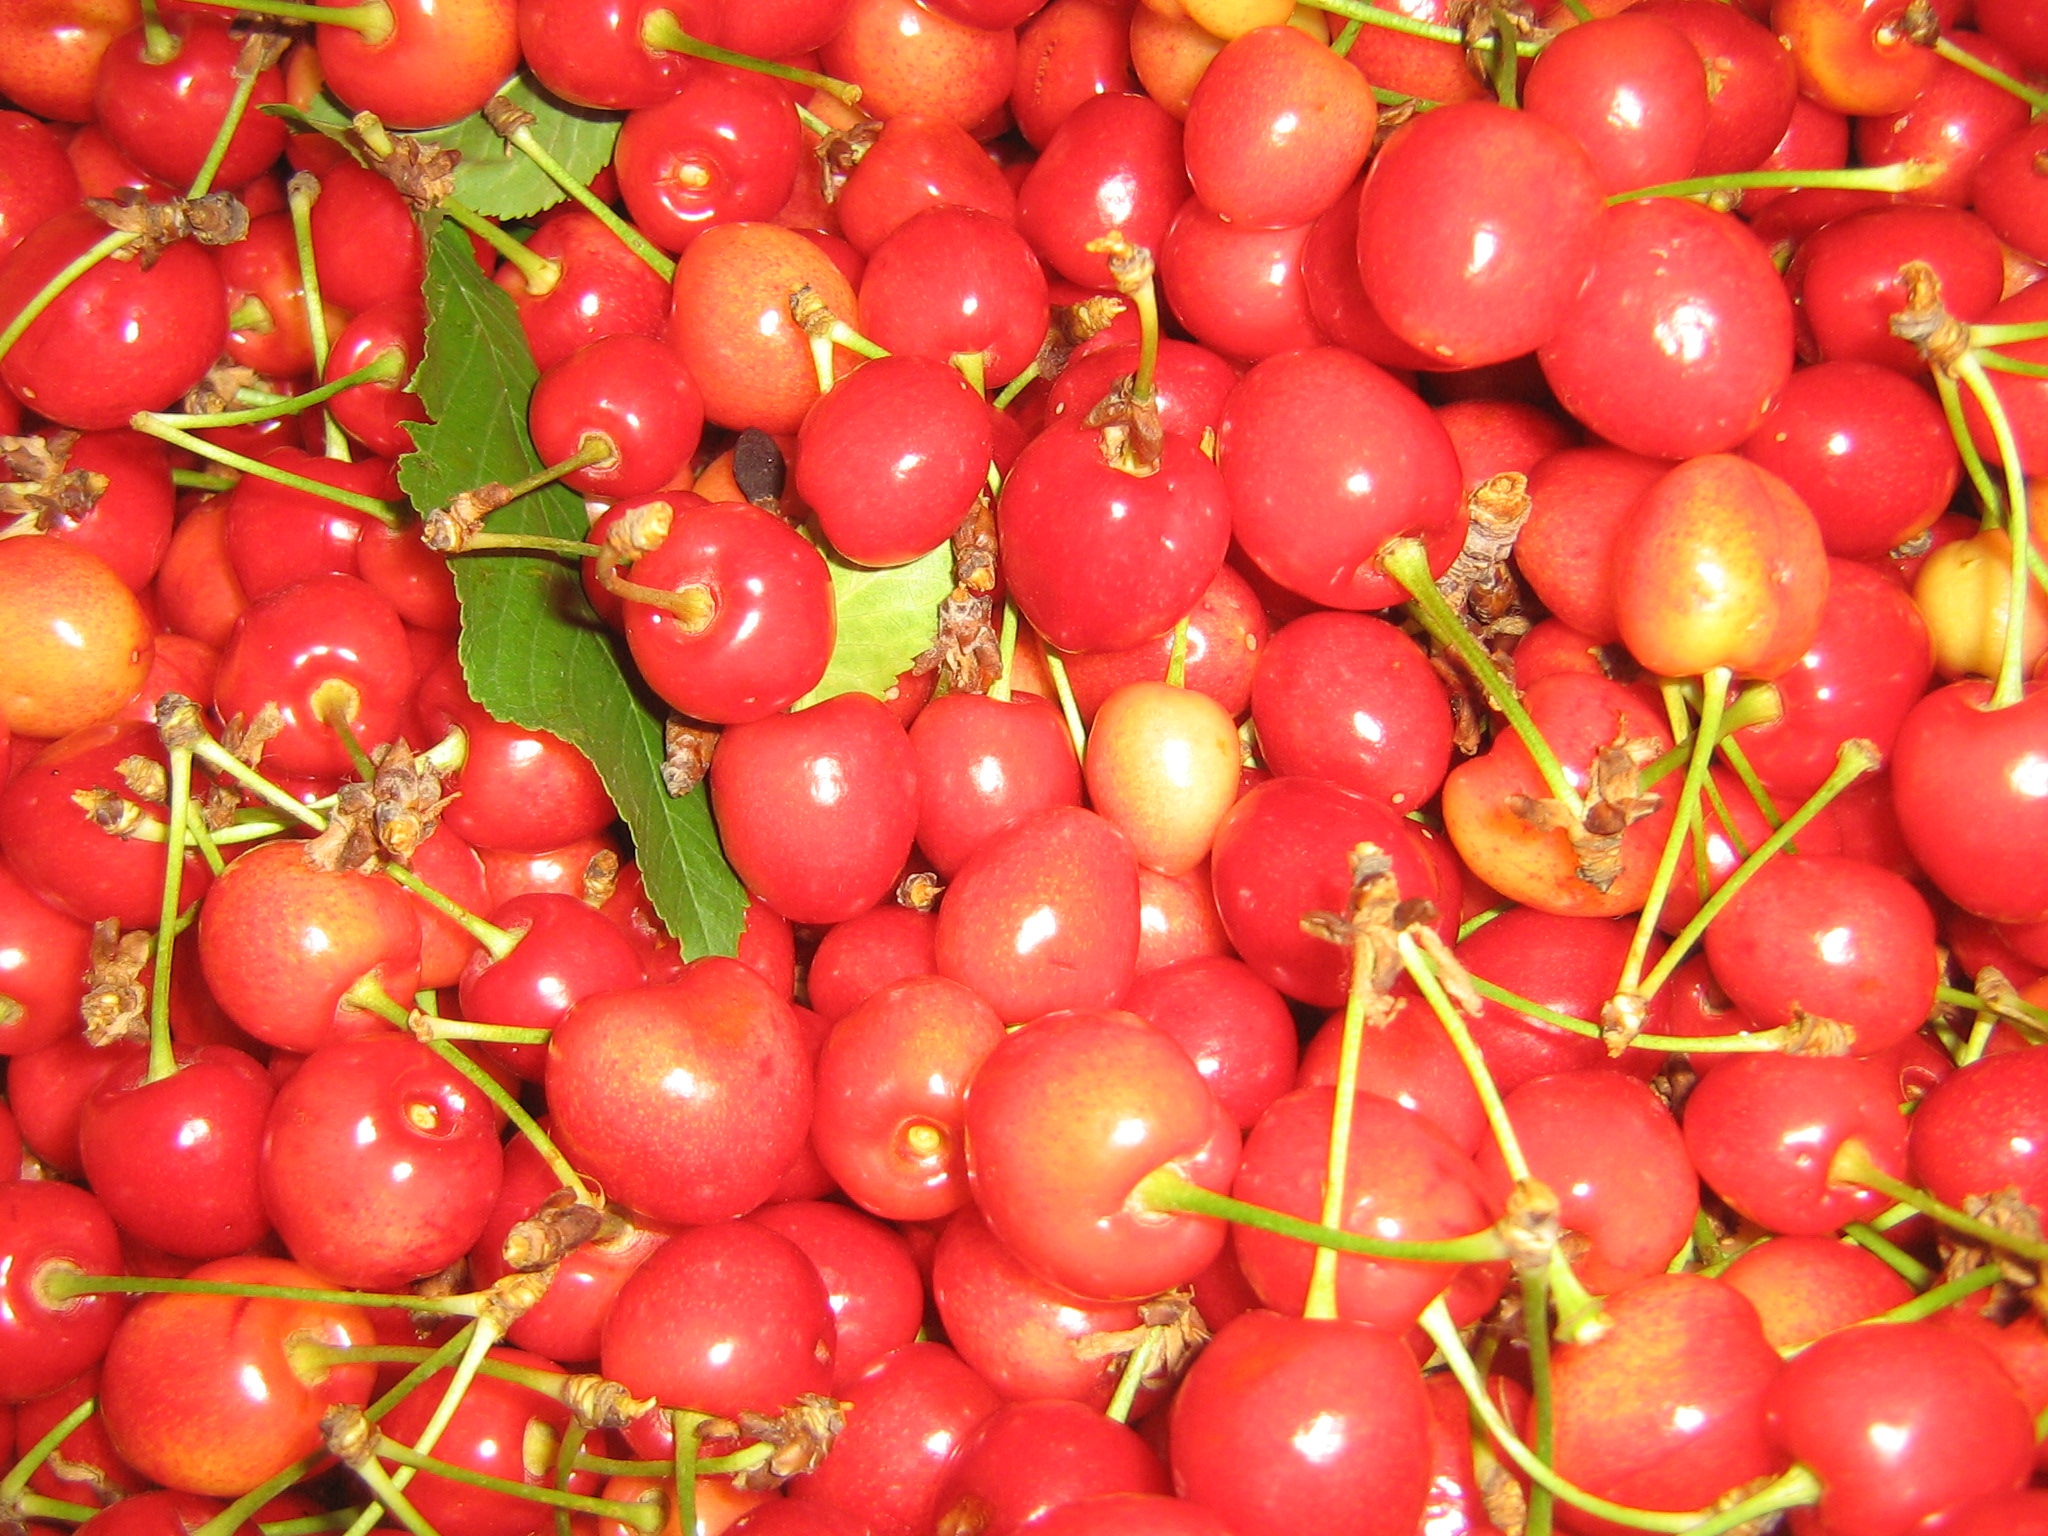 6 Wonderful Ways to Use This Year’s Cherry Crop